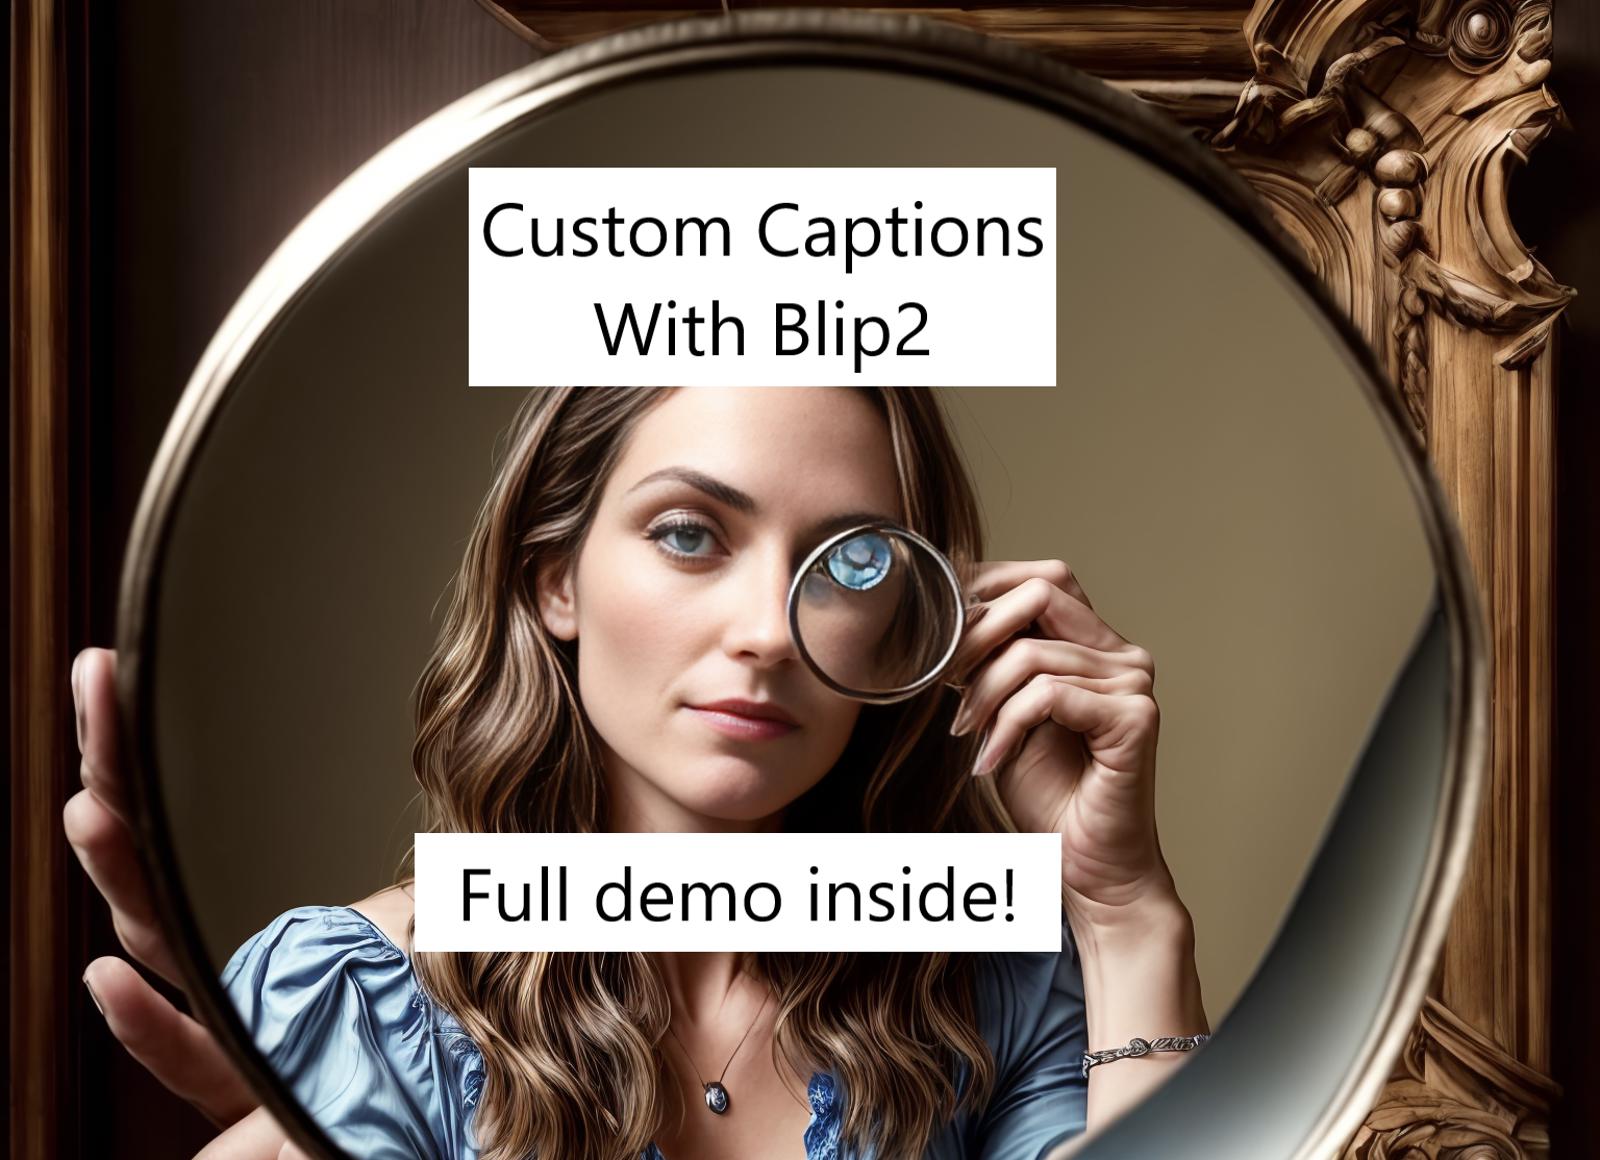 Blip2: Advanced Automatic Image Tagging 带有 blip2 的照片说明